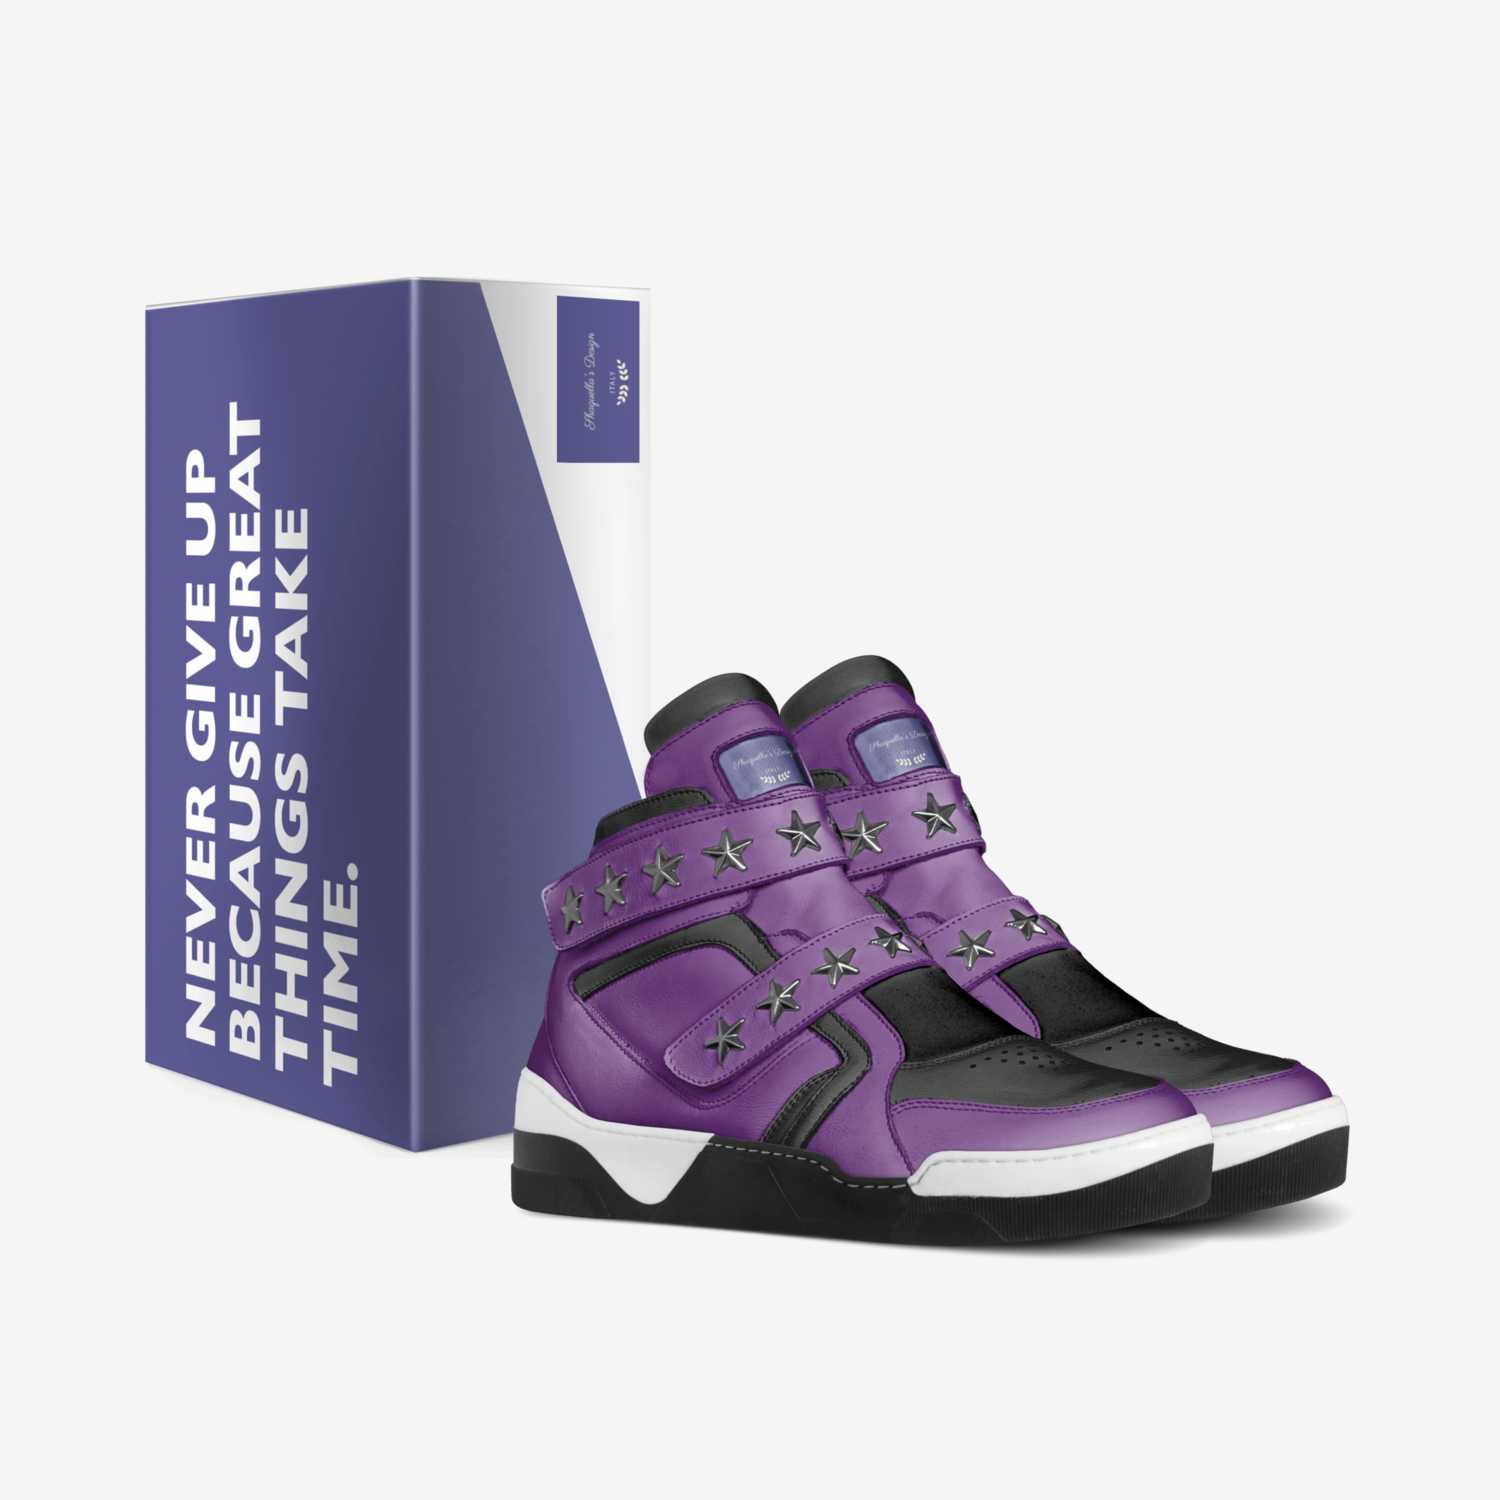 Shaquella's Design custom made in Italy shoes by Shaquella Wallop | Box view